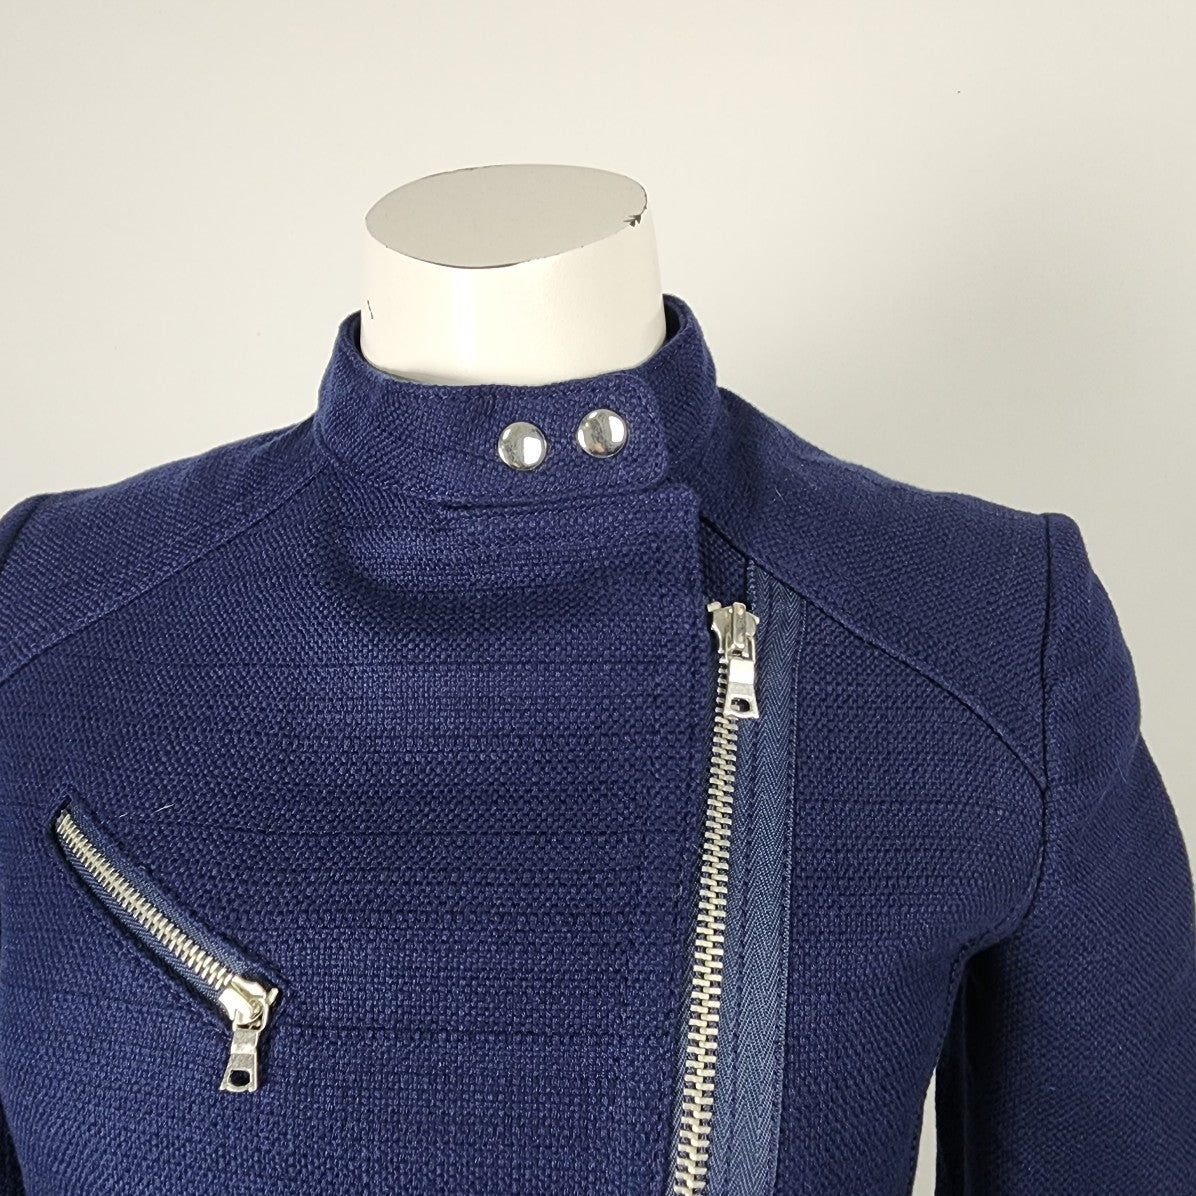 Gap Blue Cotton Zip Up Moto Jacket Size XS